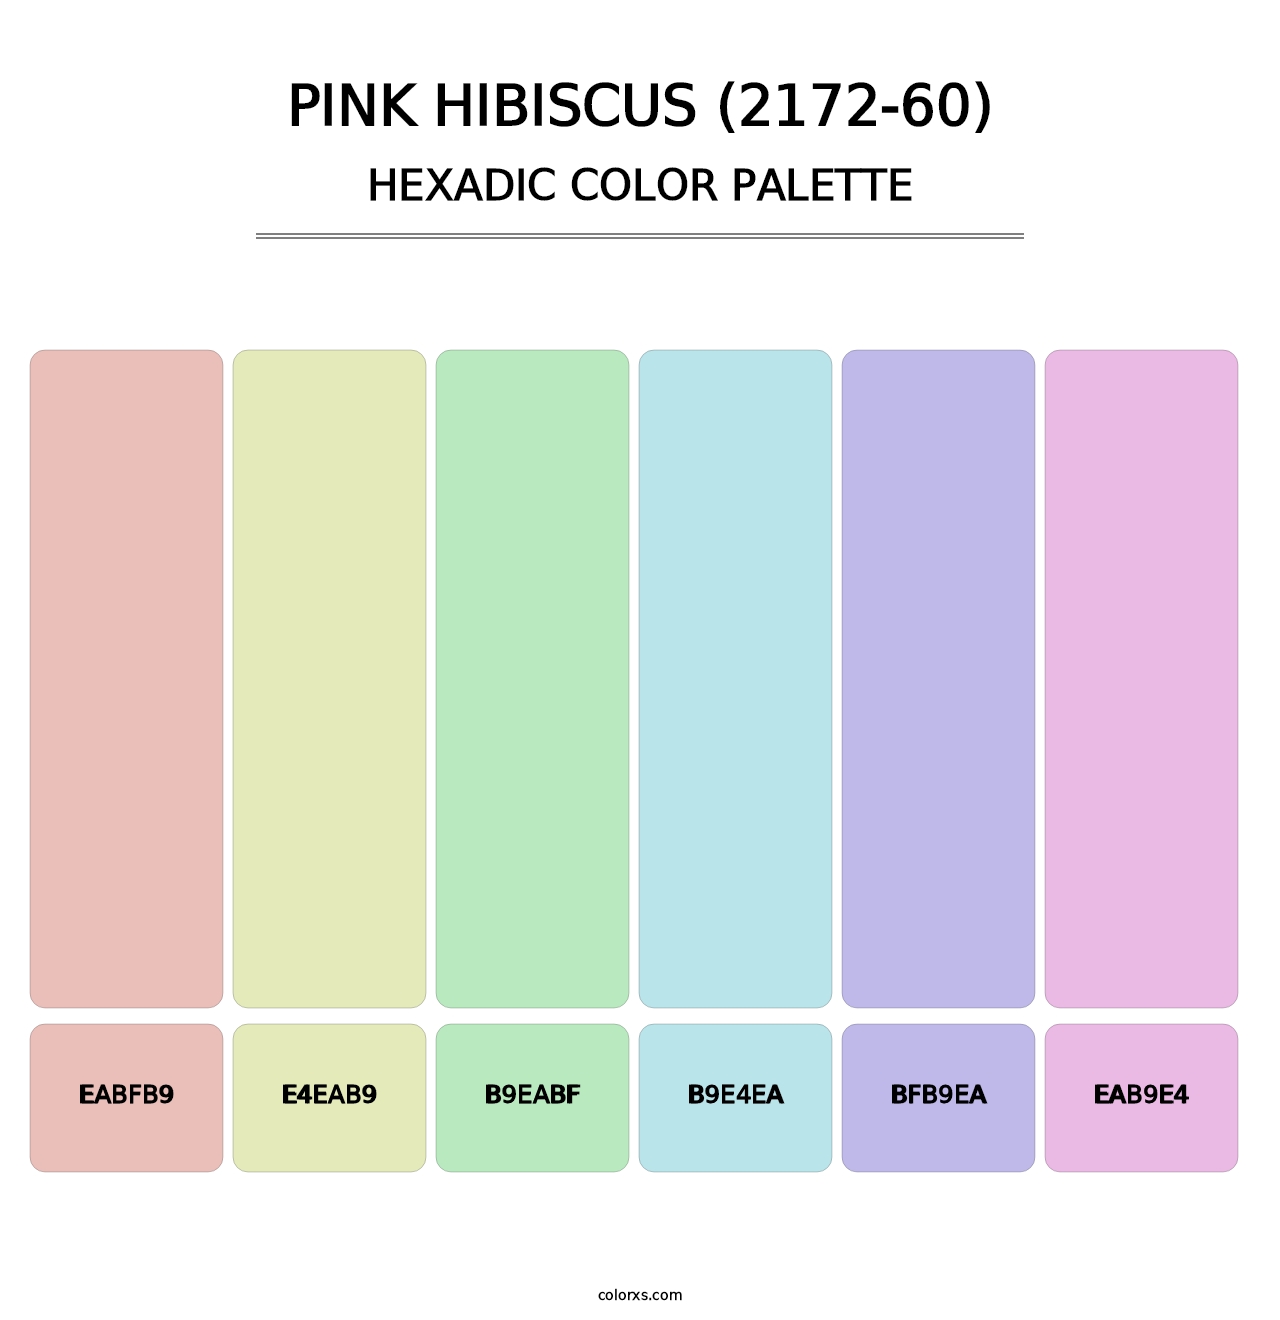 Pink Hibiscus (2172-60) - Hexadic Color Palette